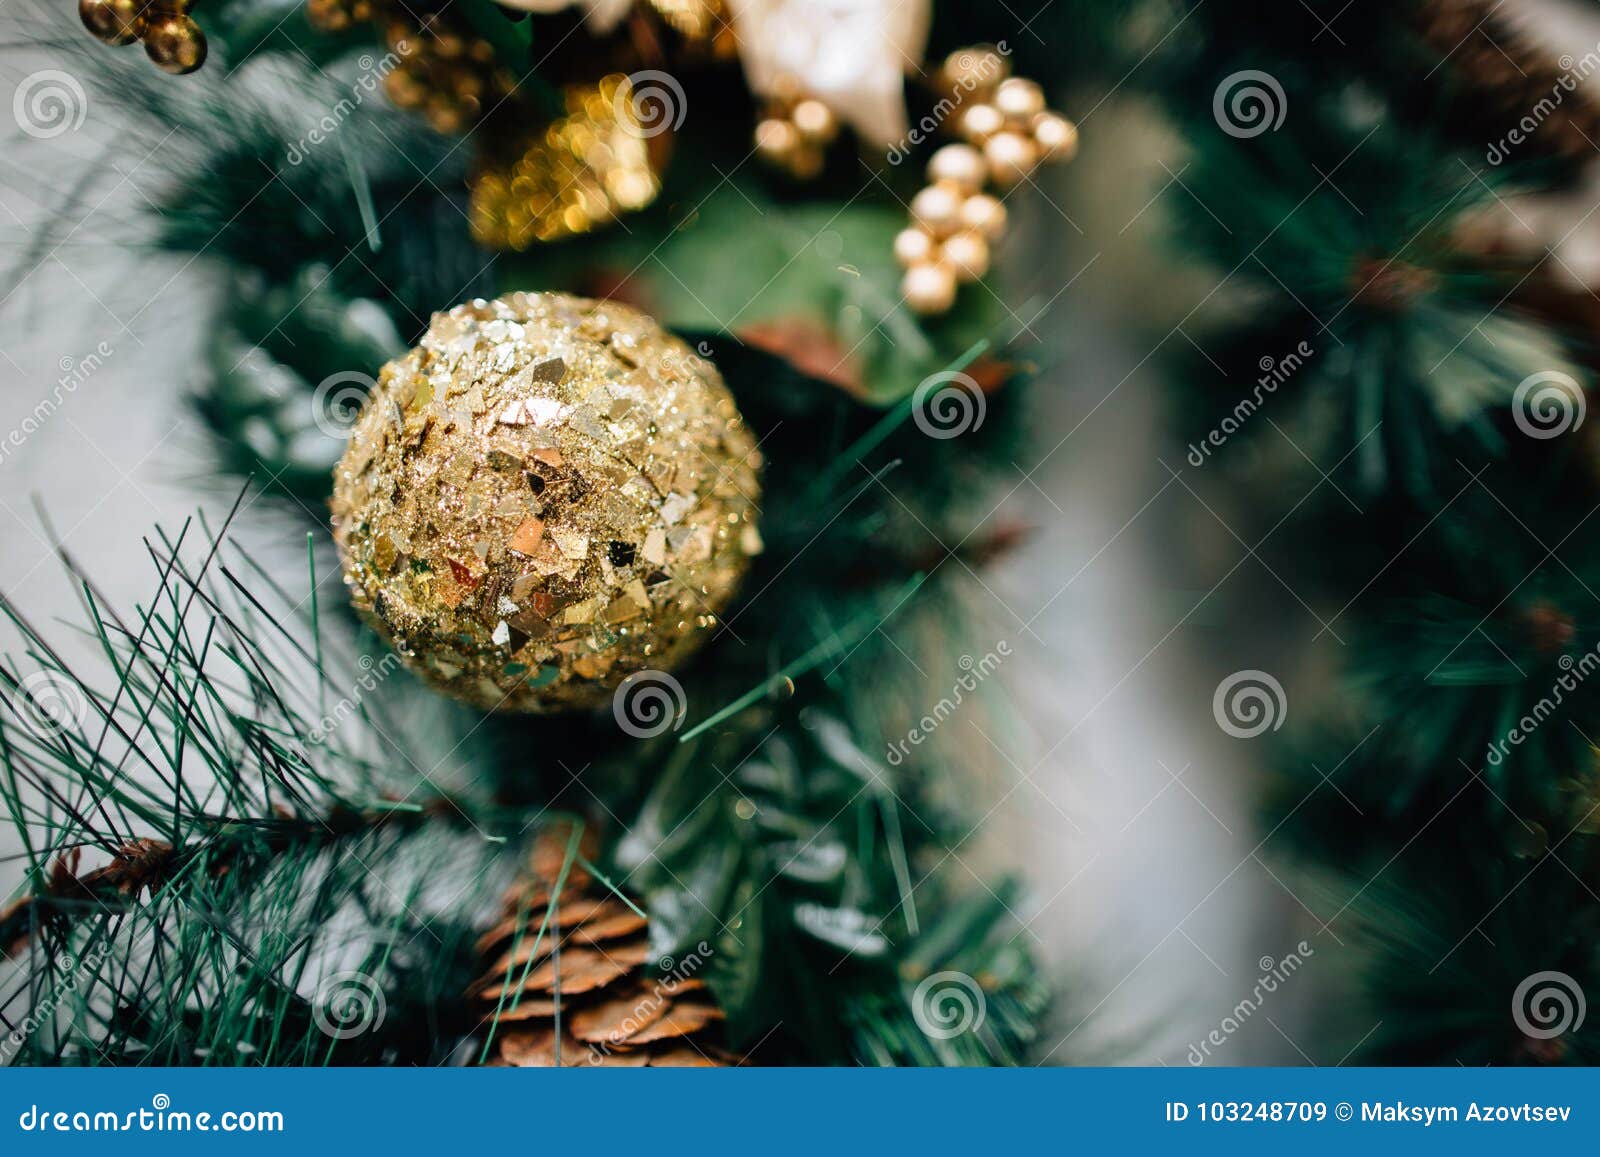 Christmas ornament on tree stock image. Image of symbol - 103248709